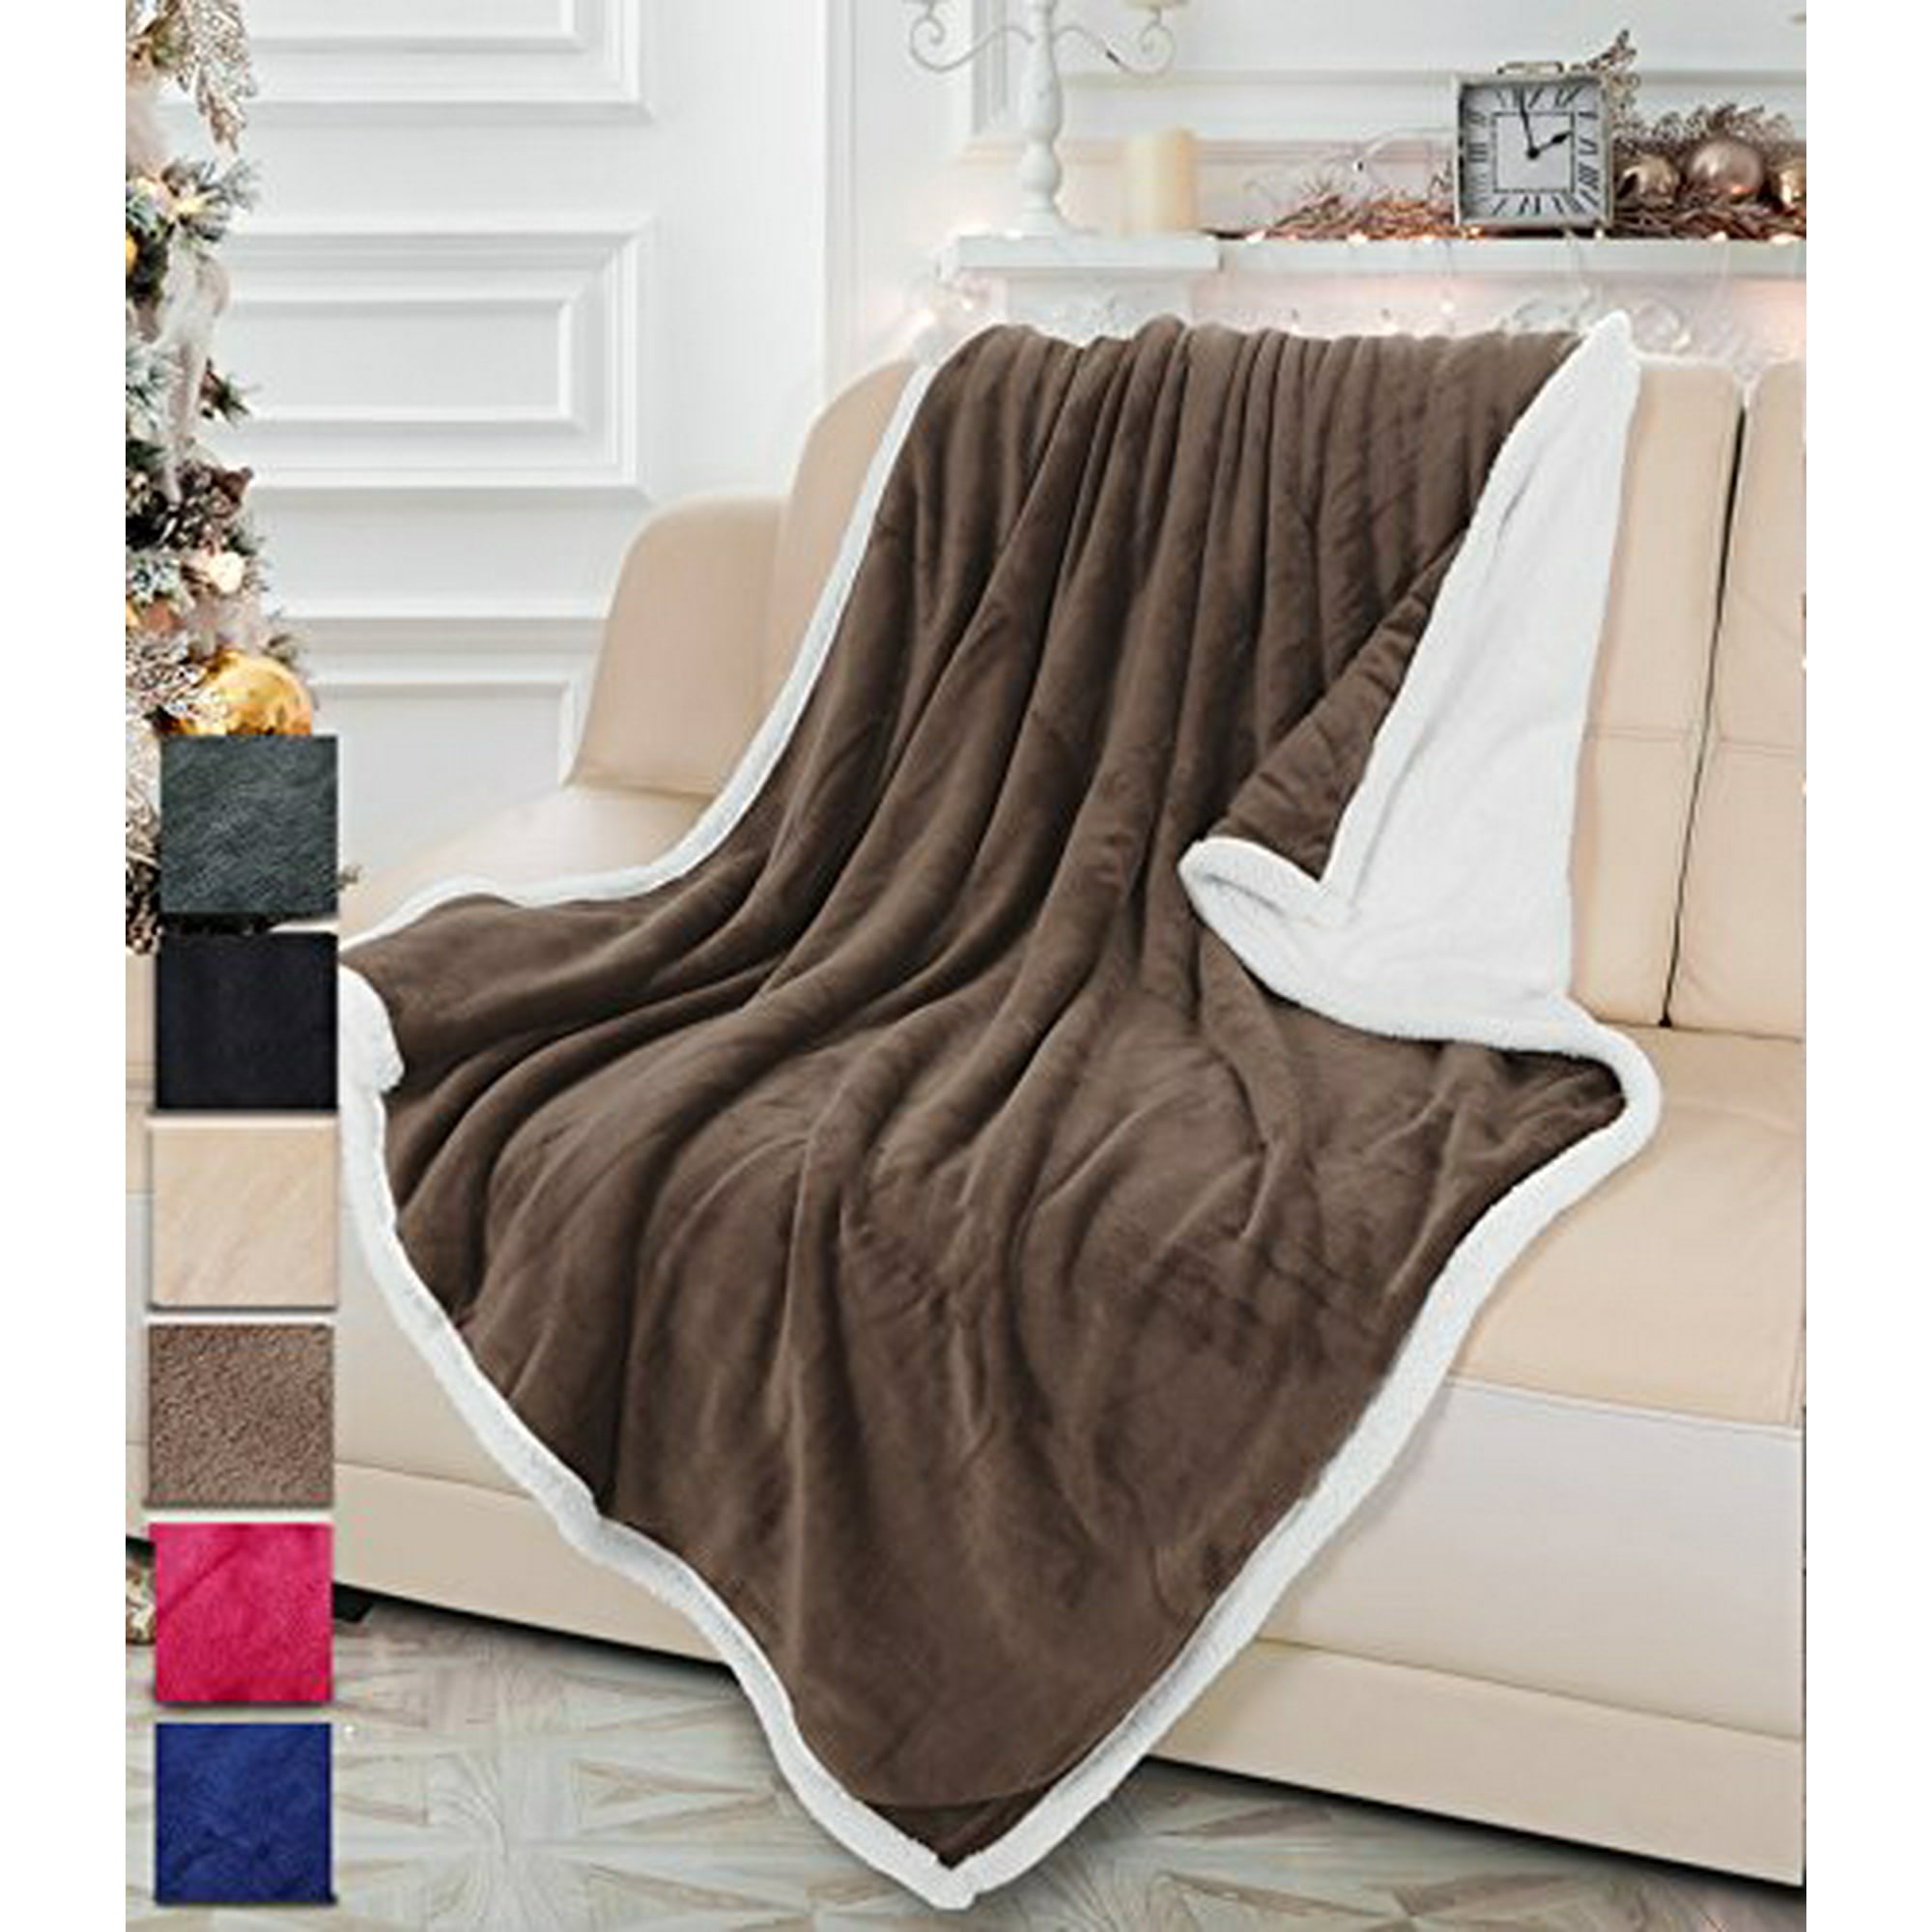 Sherpa Plush Throw Blanket Brown Throw Size 50 X 60 Bedding